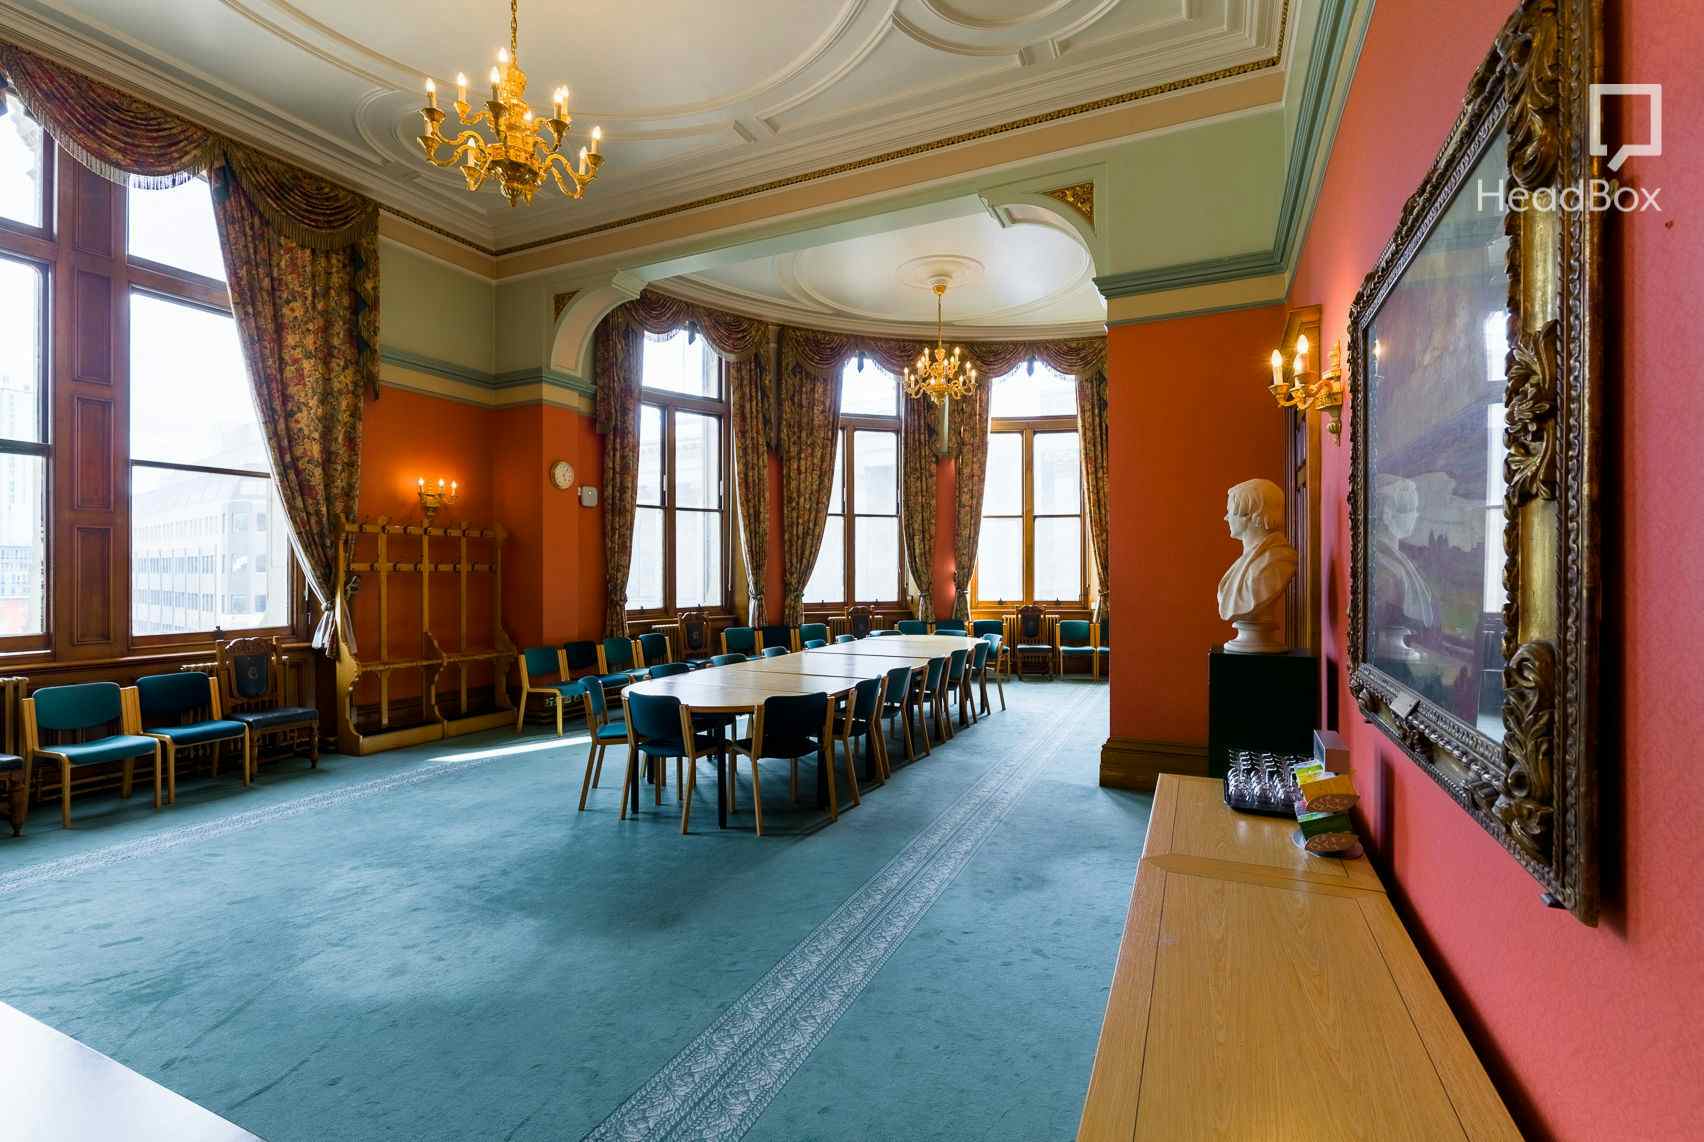 Chamberlain Room, Council House Birmingham